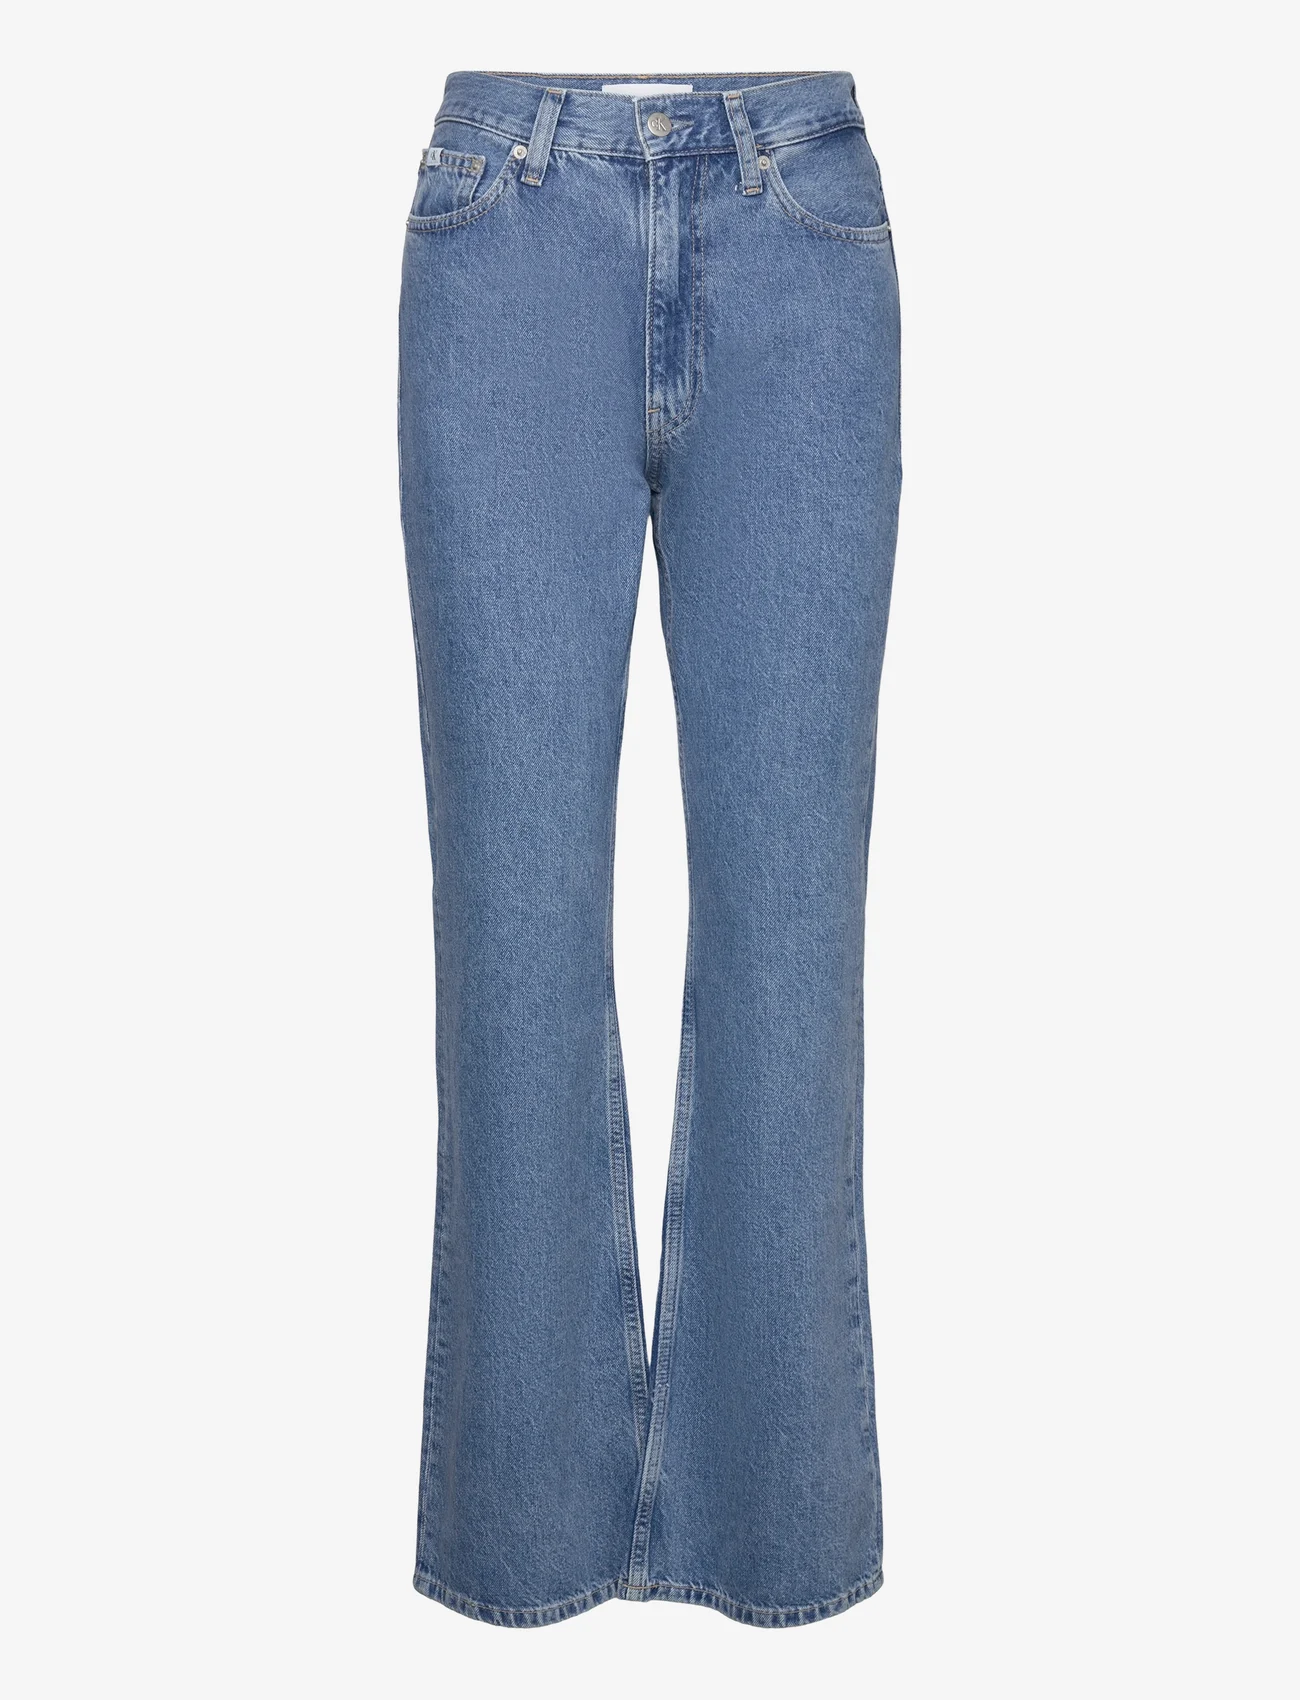 Calvin Klein Jeans - AUTHENTIC BOOTCUT - dżinsy typu bootcut - denim medium - 0